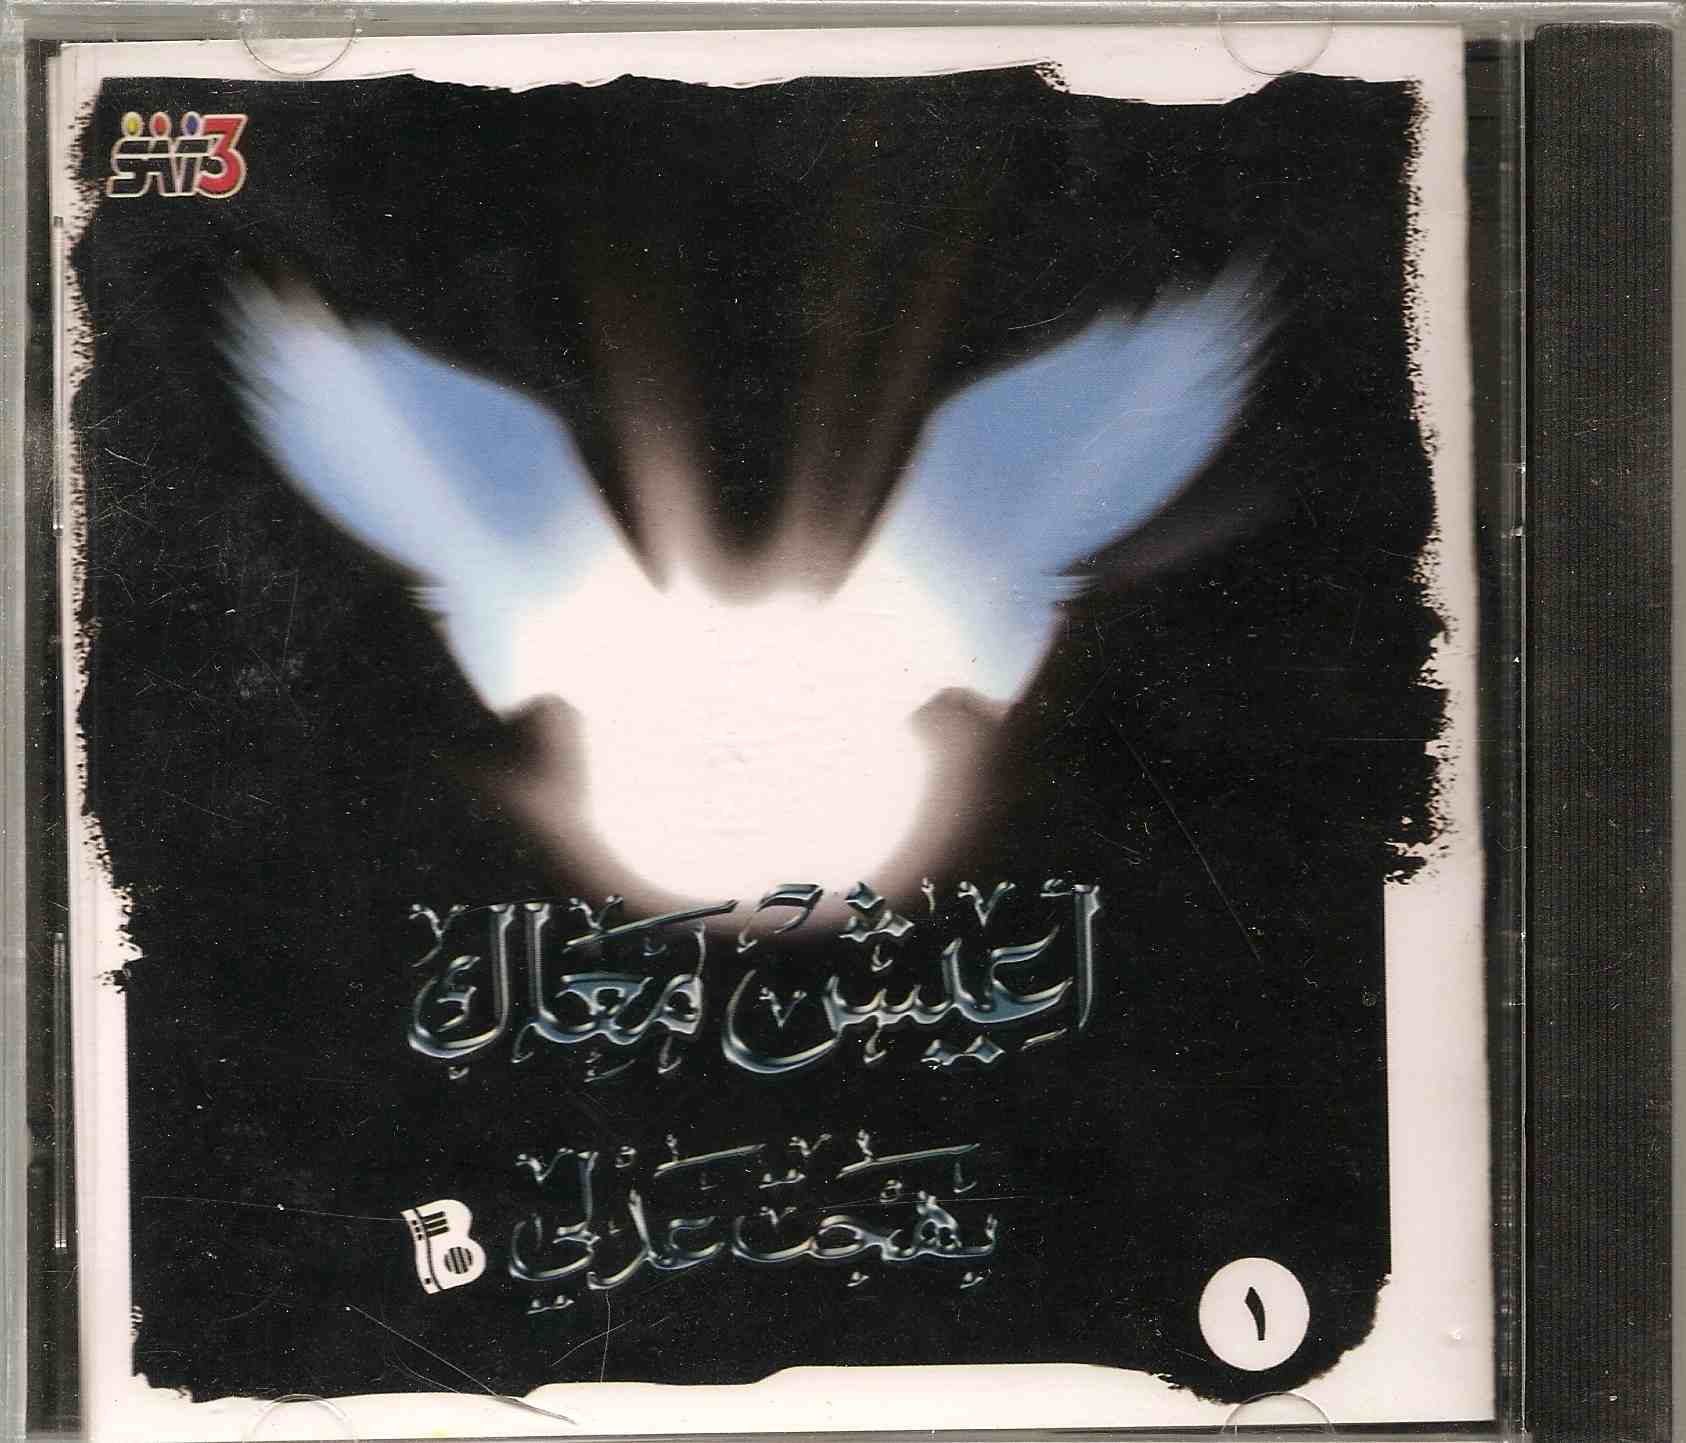 Arabic CD "Aeesh Maak"- I live with you By Bahgat Adlee